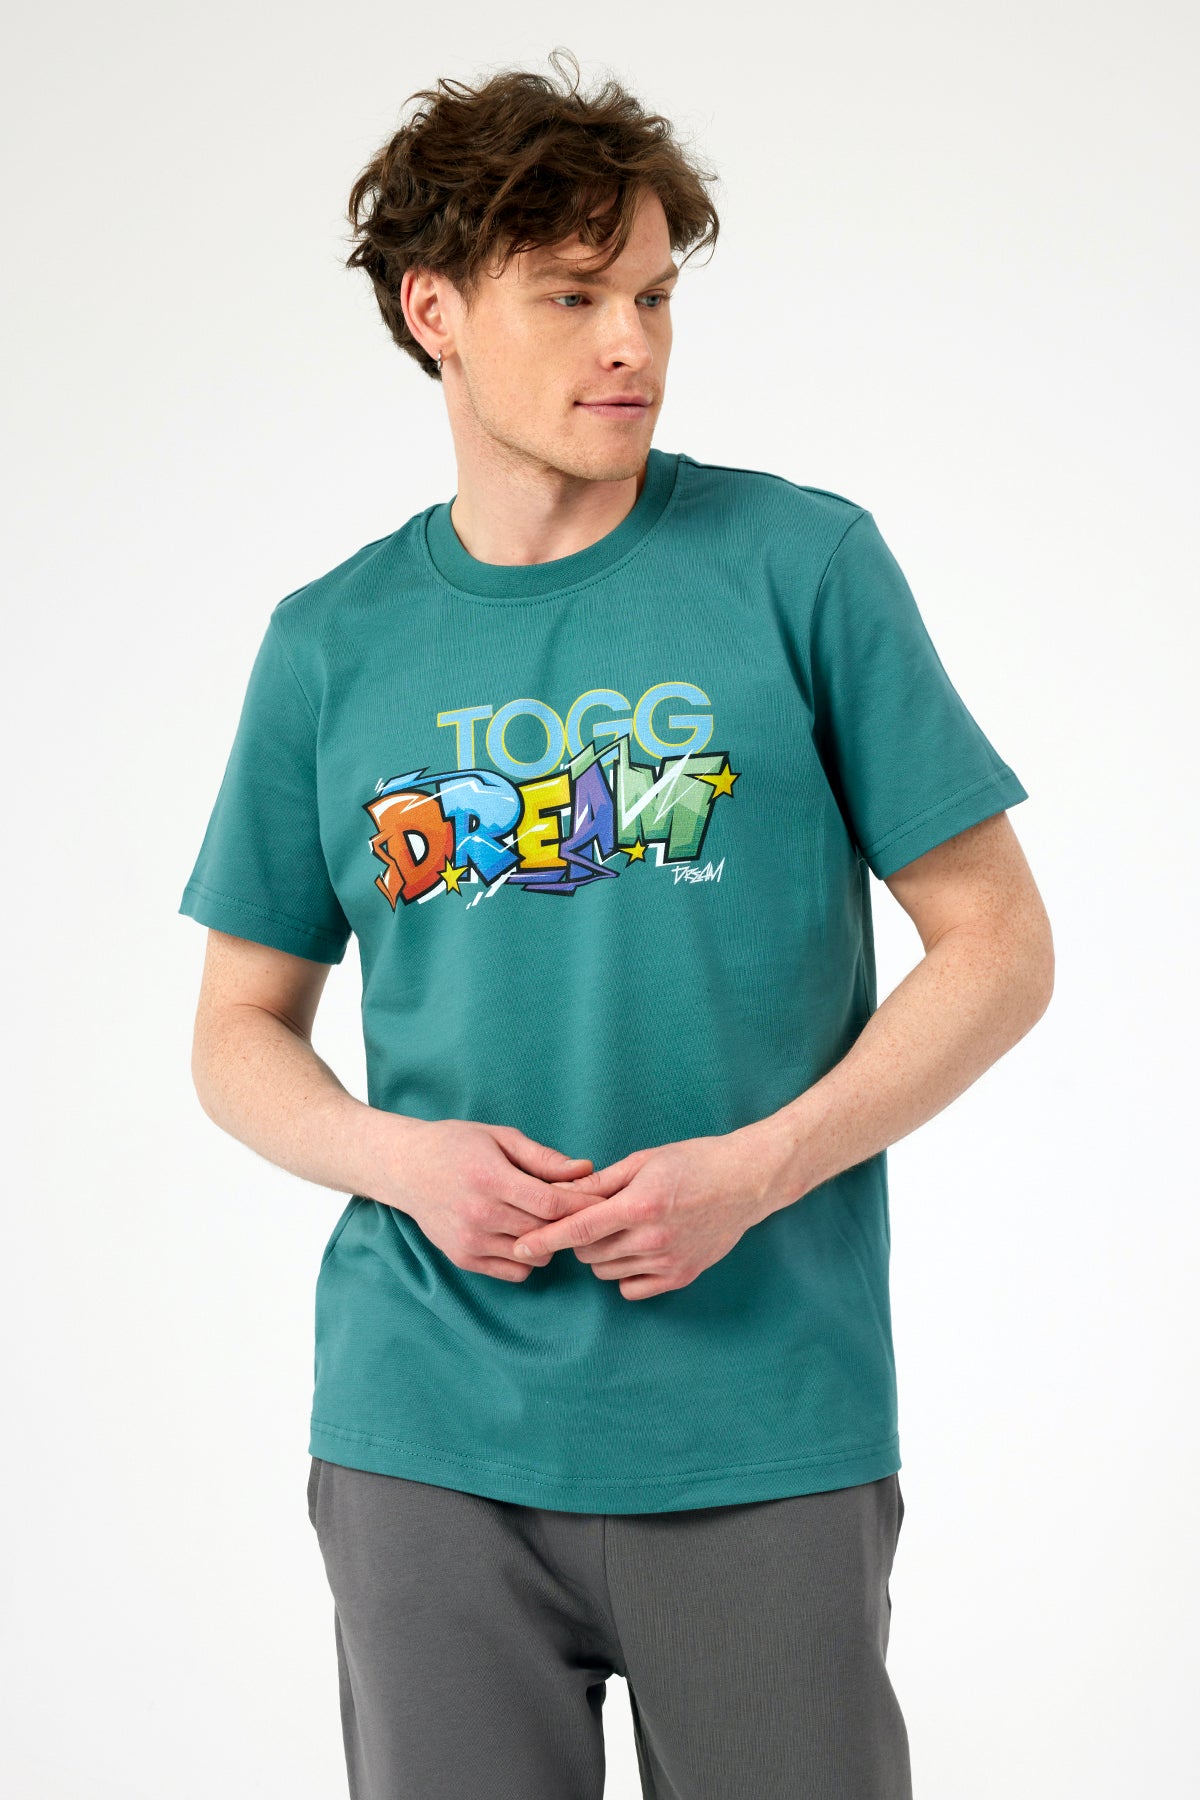 Togg Dream t-shirt